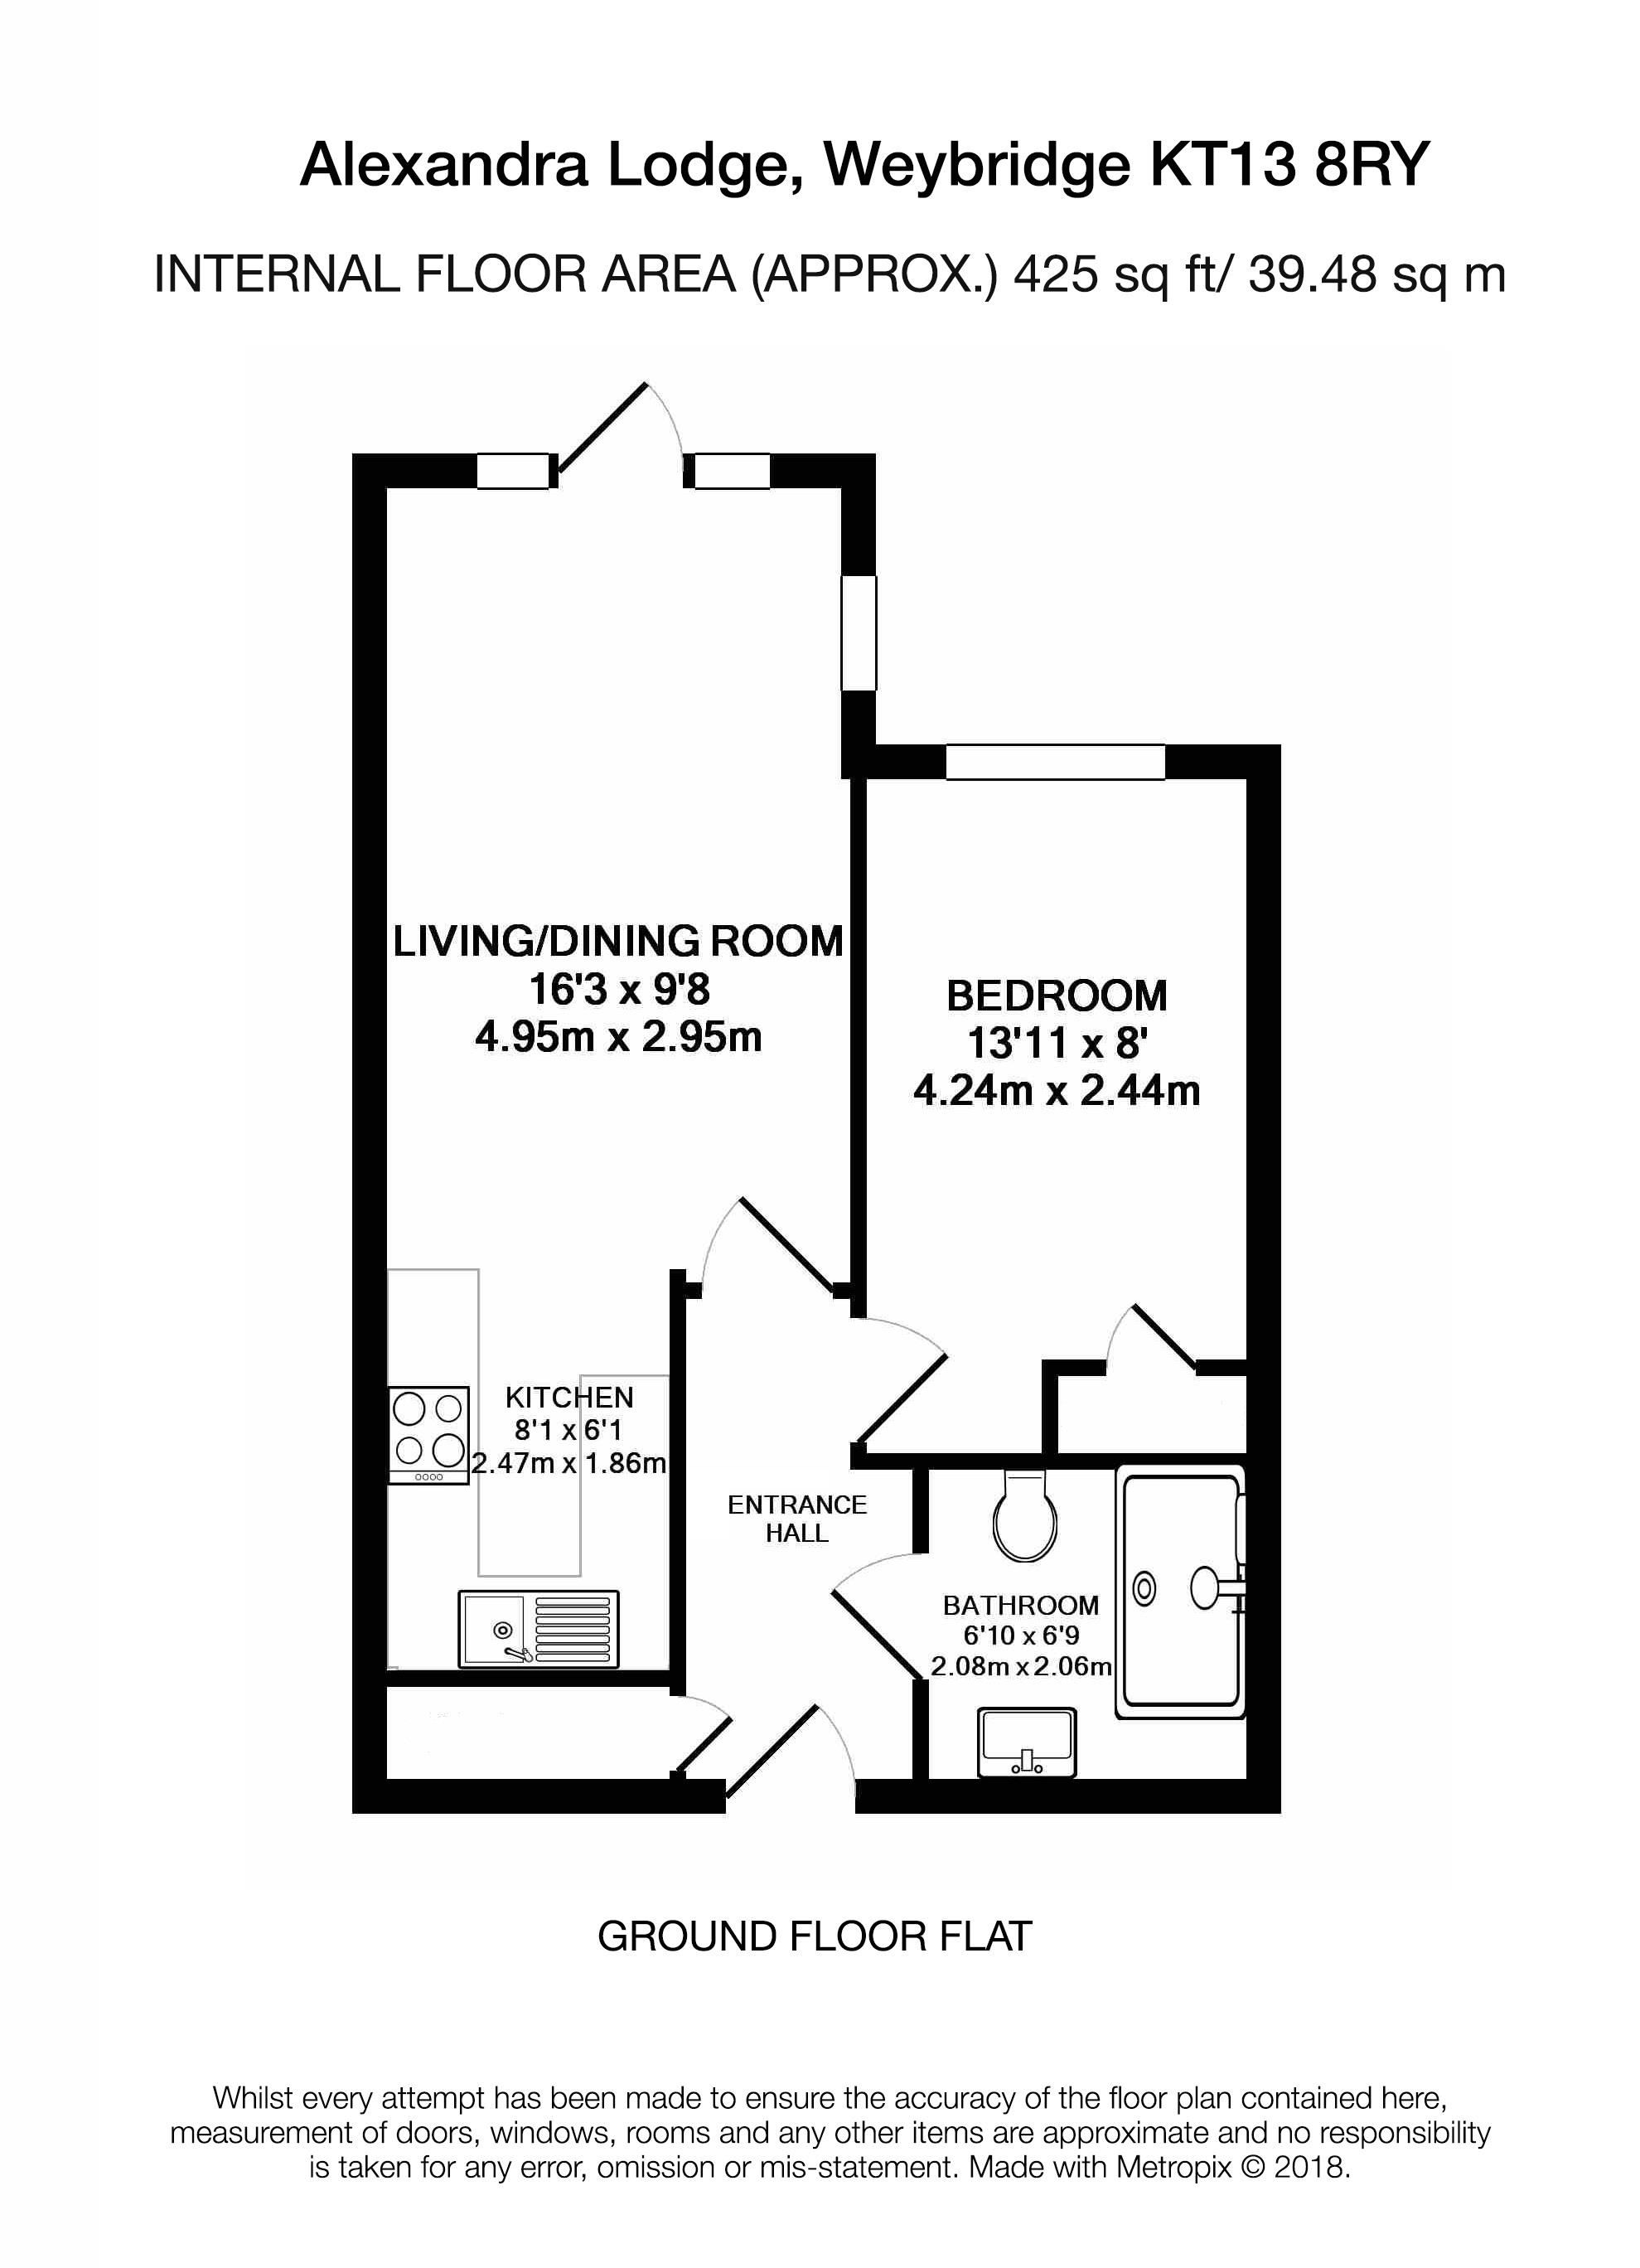 Floorplan - 1 Bedroom Apartment, Alexandra Lodge – Weybridge